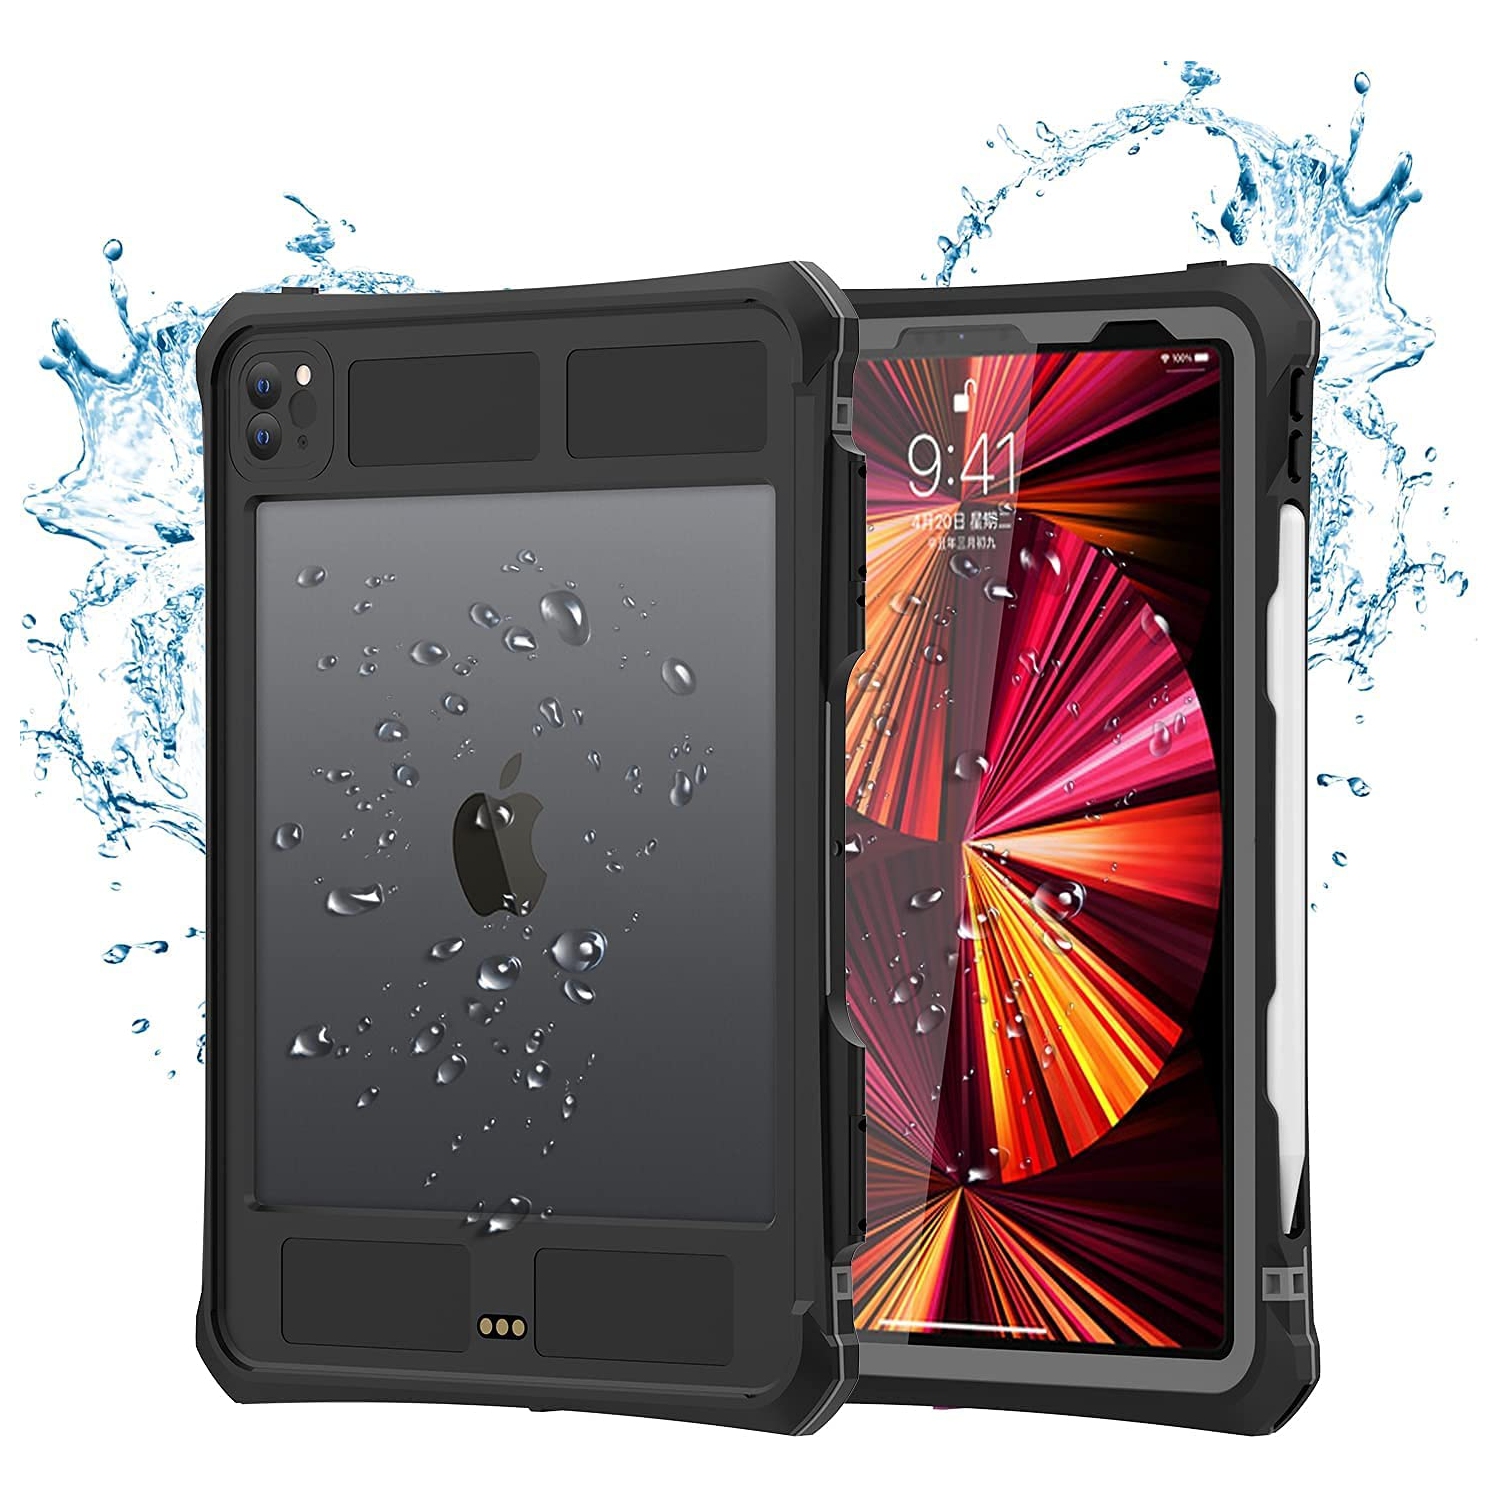 2020/2021,Full-Body Protective Case,Magnetic Pencil Holder,External Keyboard Interface,IP68 Waterproof Dustproof Shockproof iPad Pro 11 Inch Case (Black)